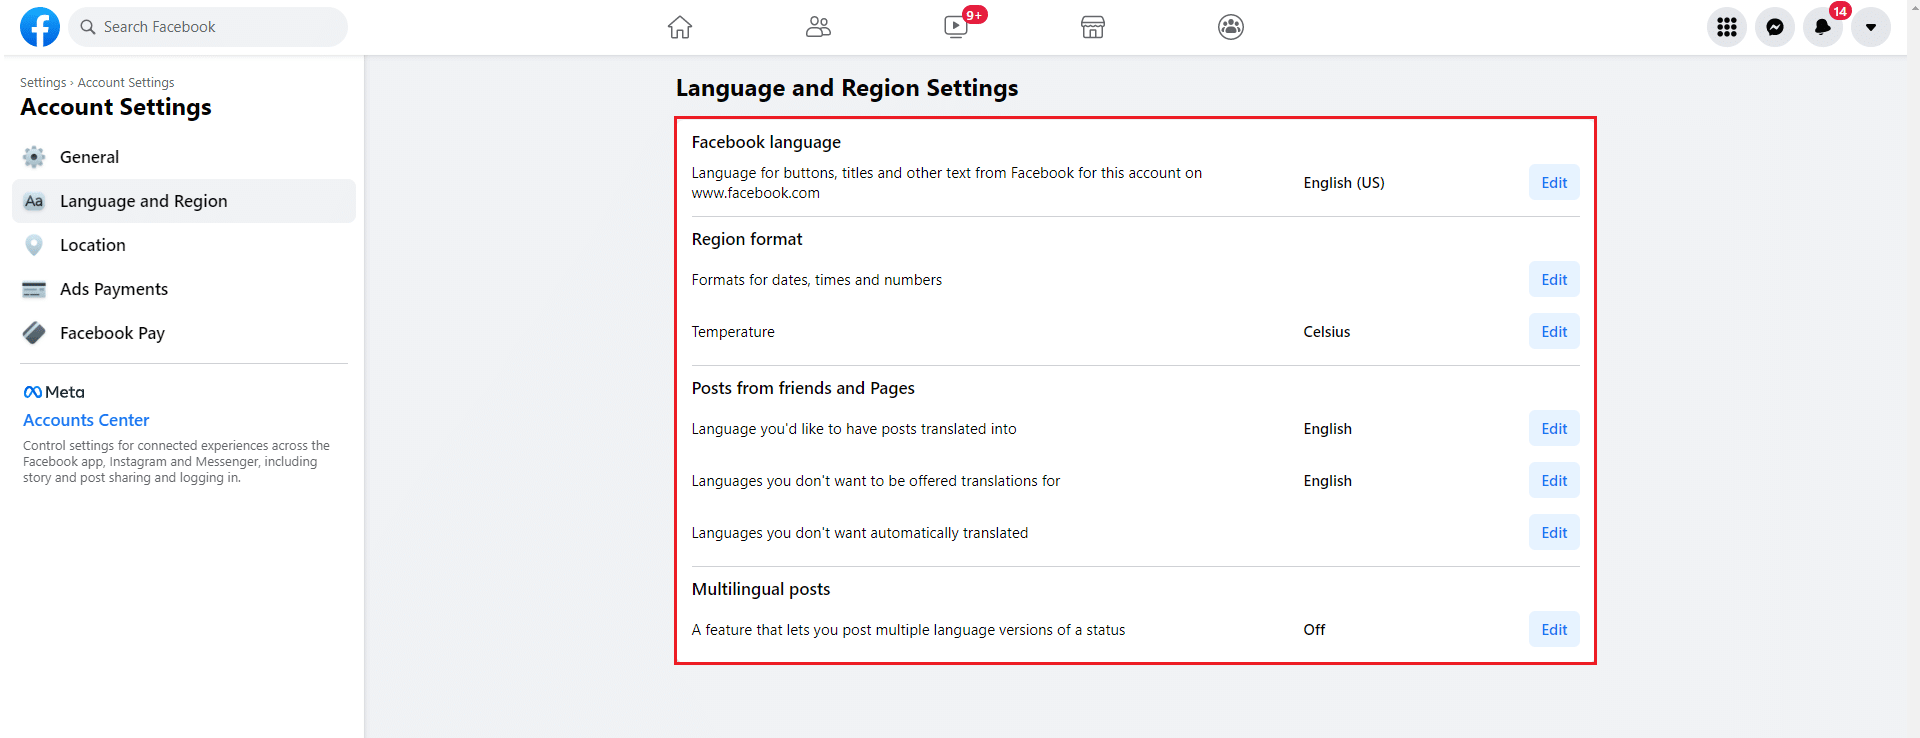 Facebook language and region settings